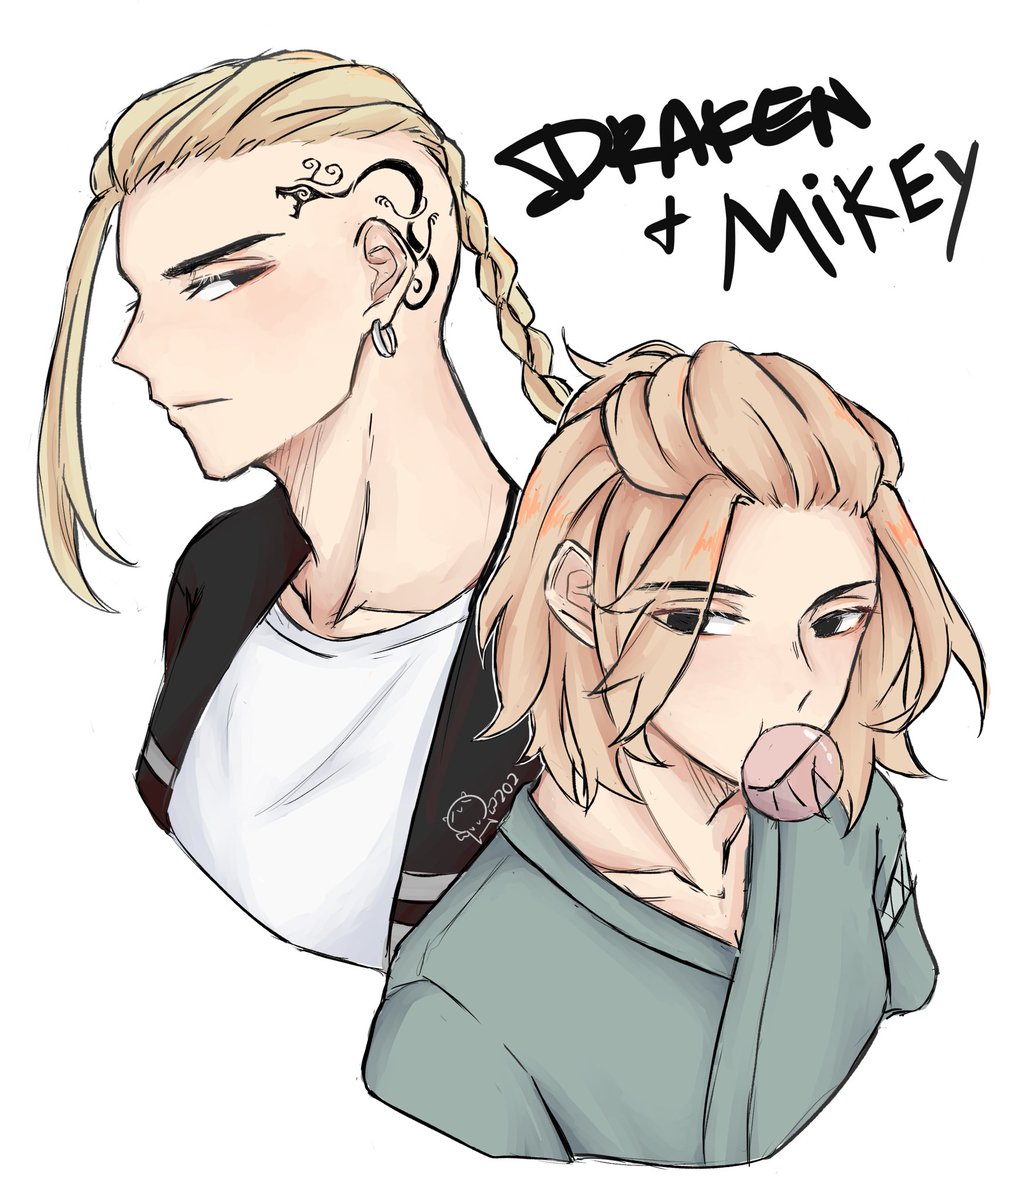 Draken dan mikey